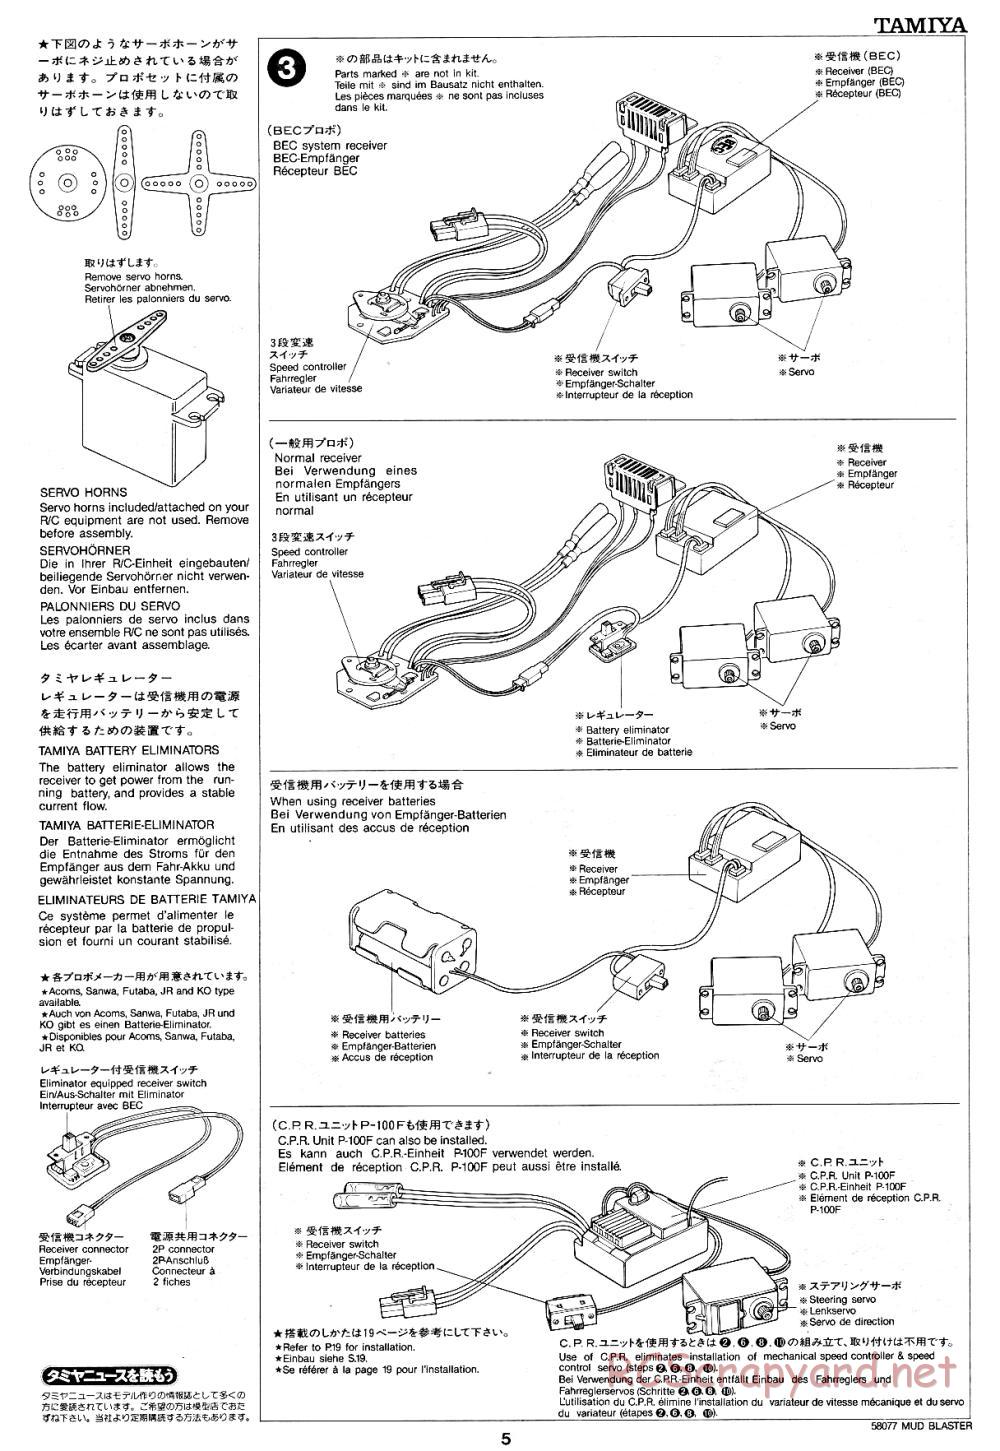 Tamiya - Mud Blaster - 58077 - Manual - Page 5